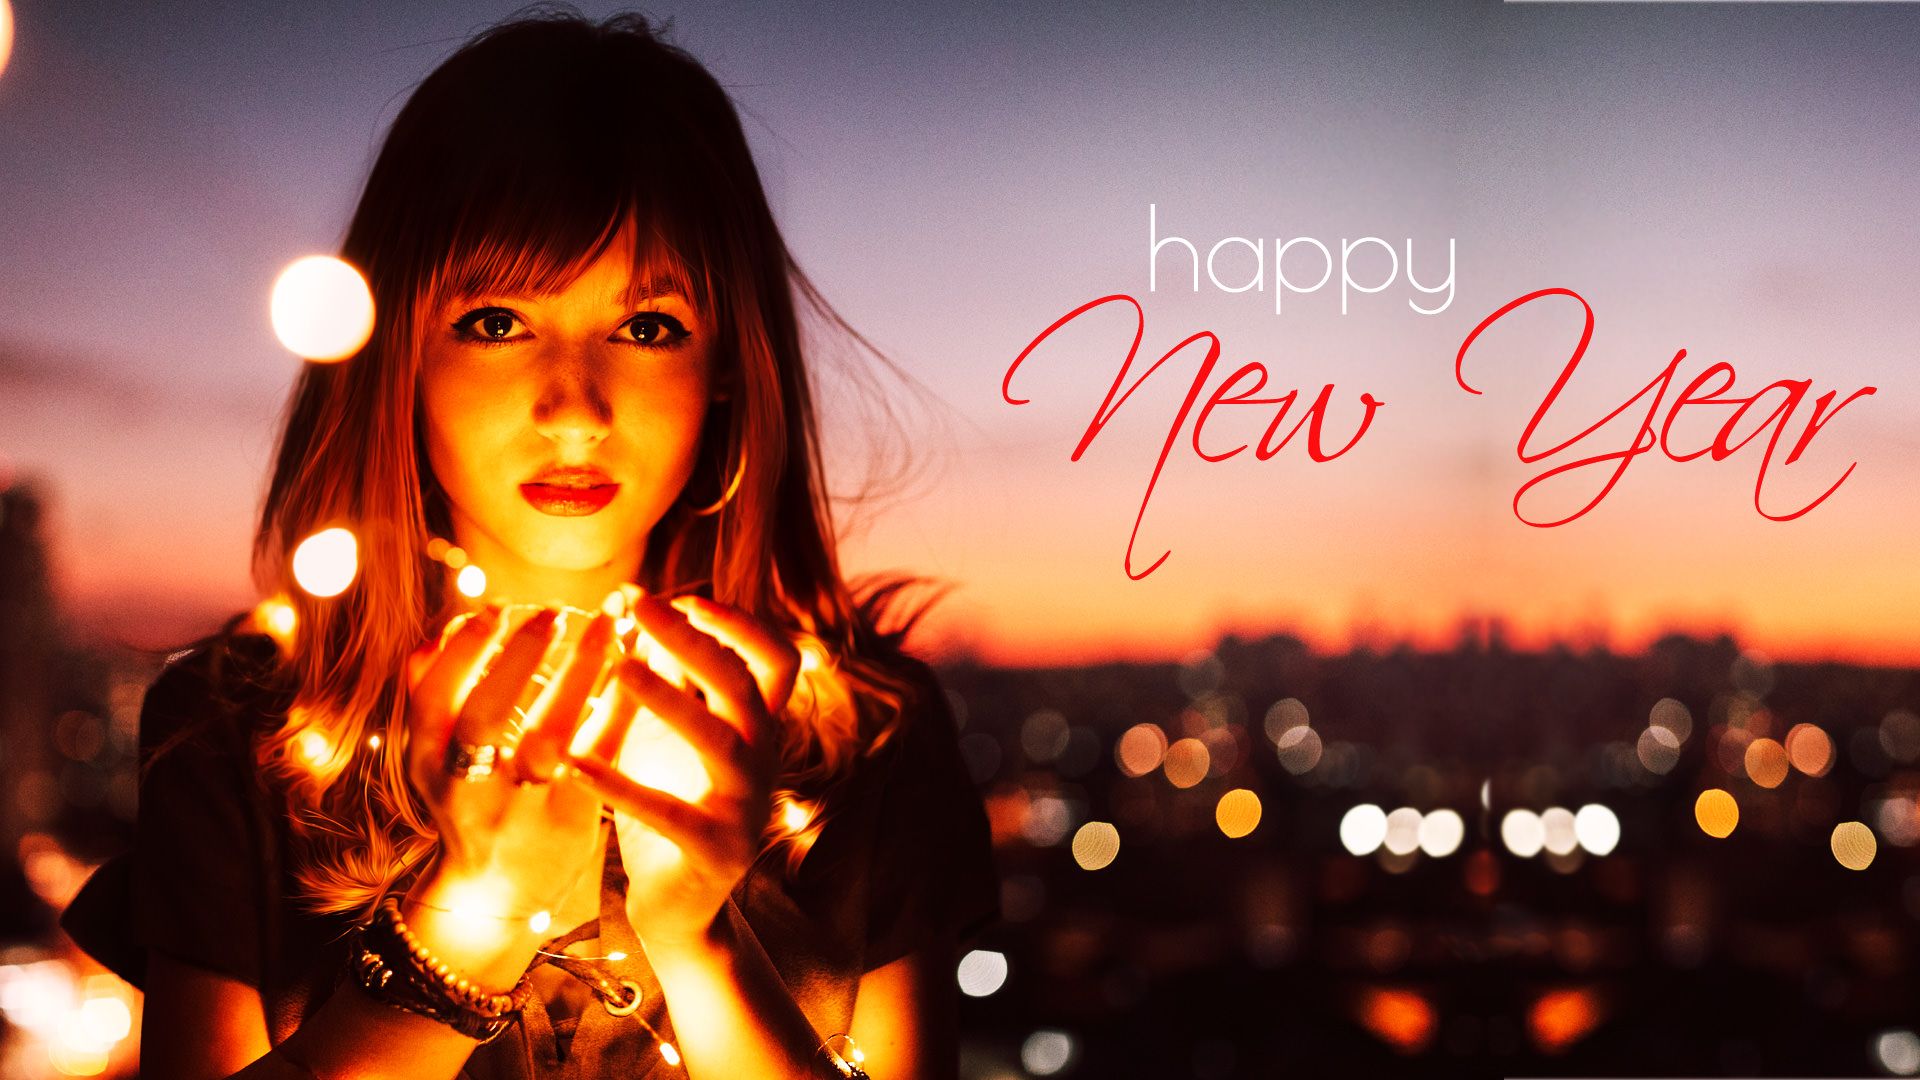 Special Happy New Year 2020 Wallpaper, HD Greetings Desktop Image